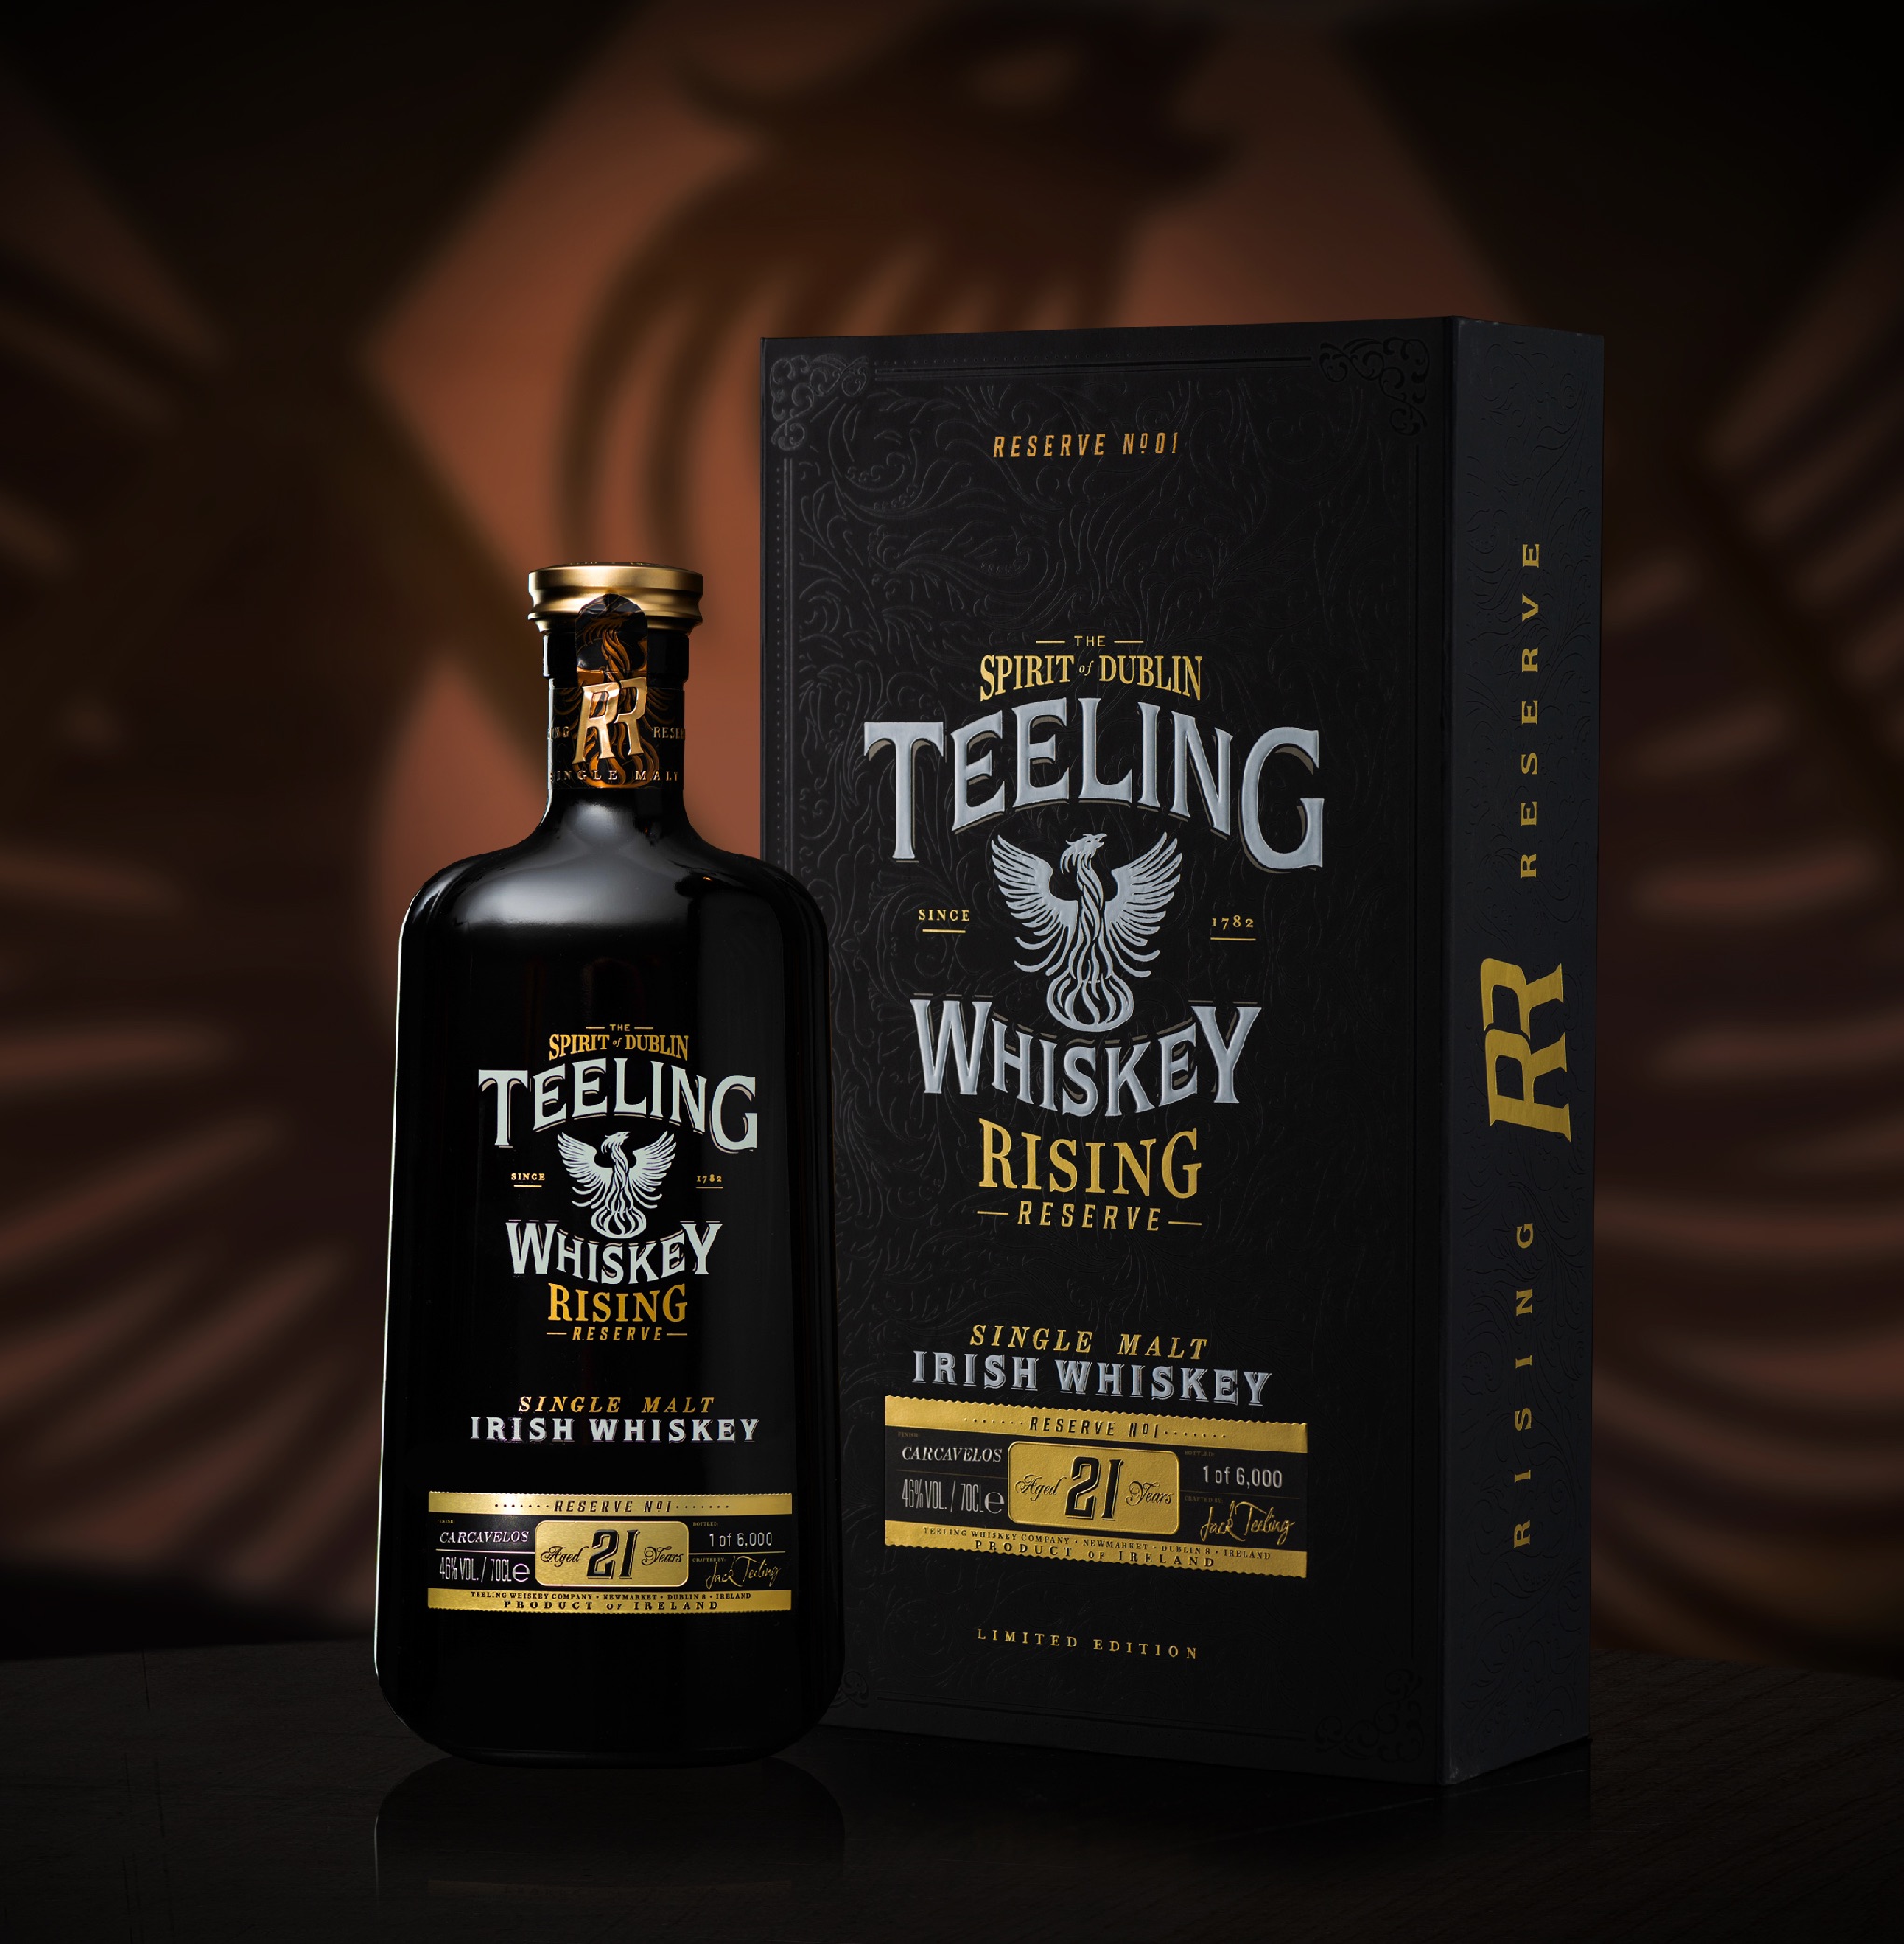 Teeling Whiskey Rising Reserve Packaging Design